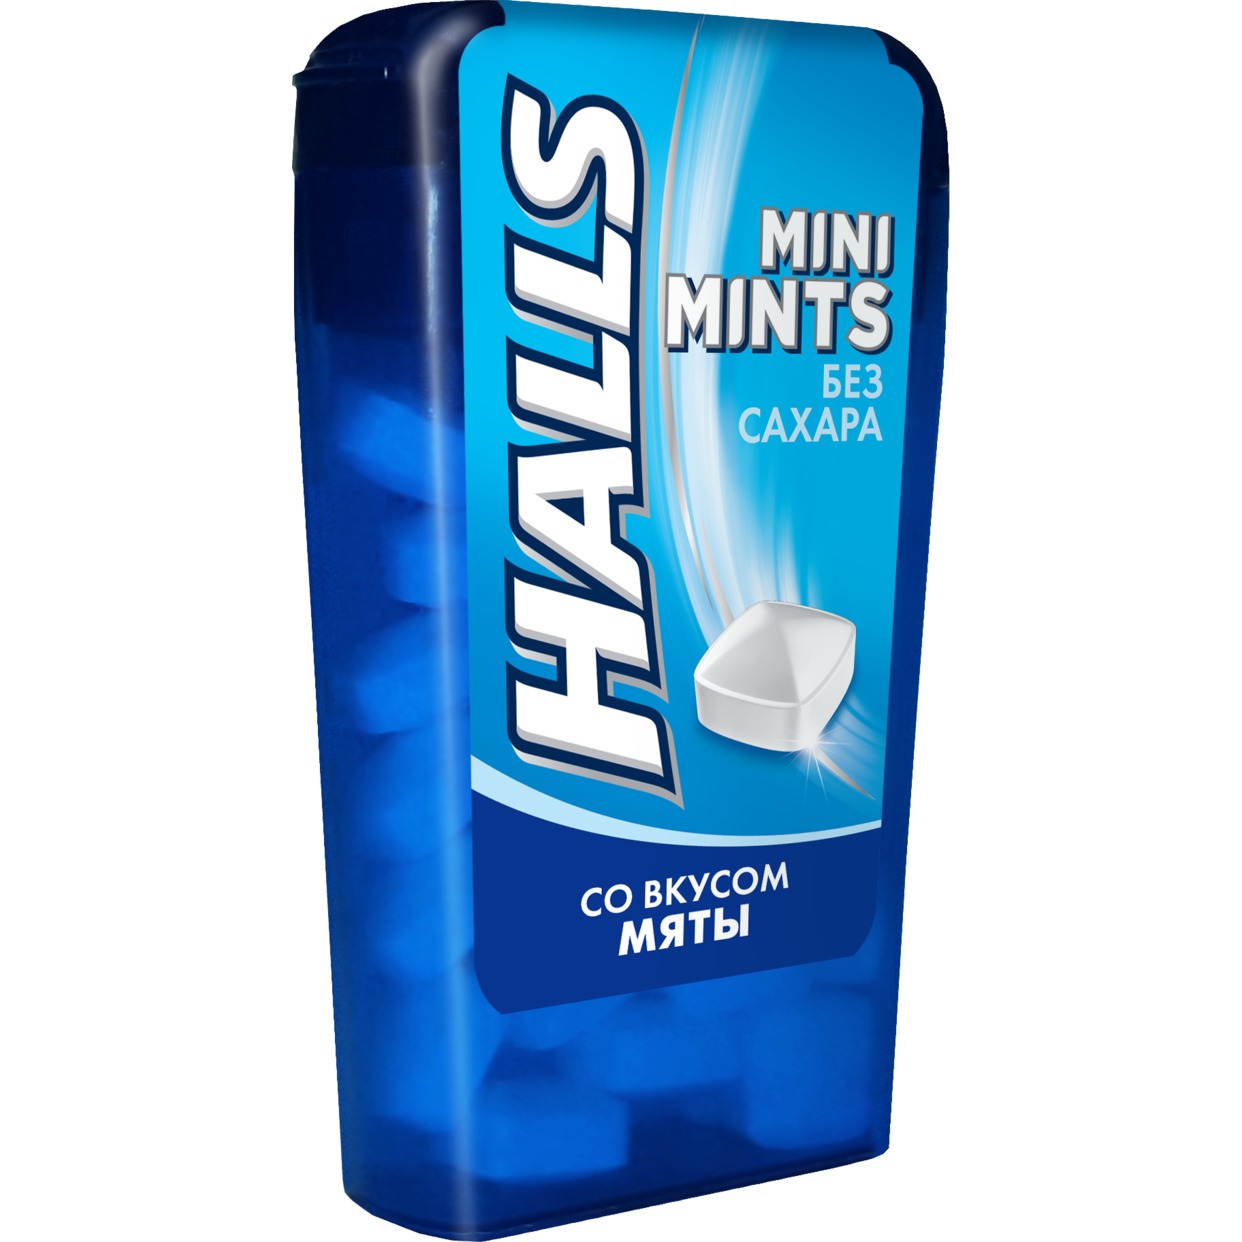 Конфеты Halls Mini Mints со вкусом мяты без сахара 12.5г по акции в Пятерочке